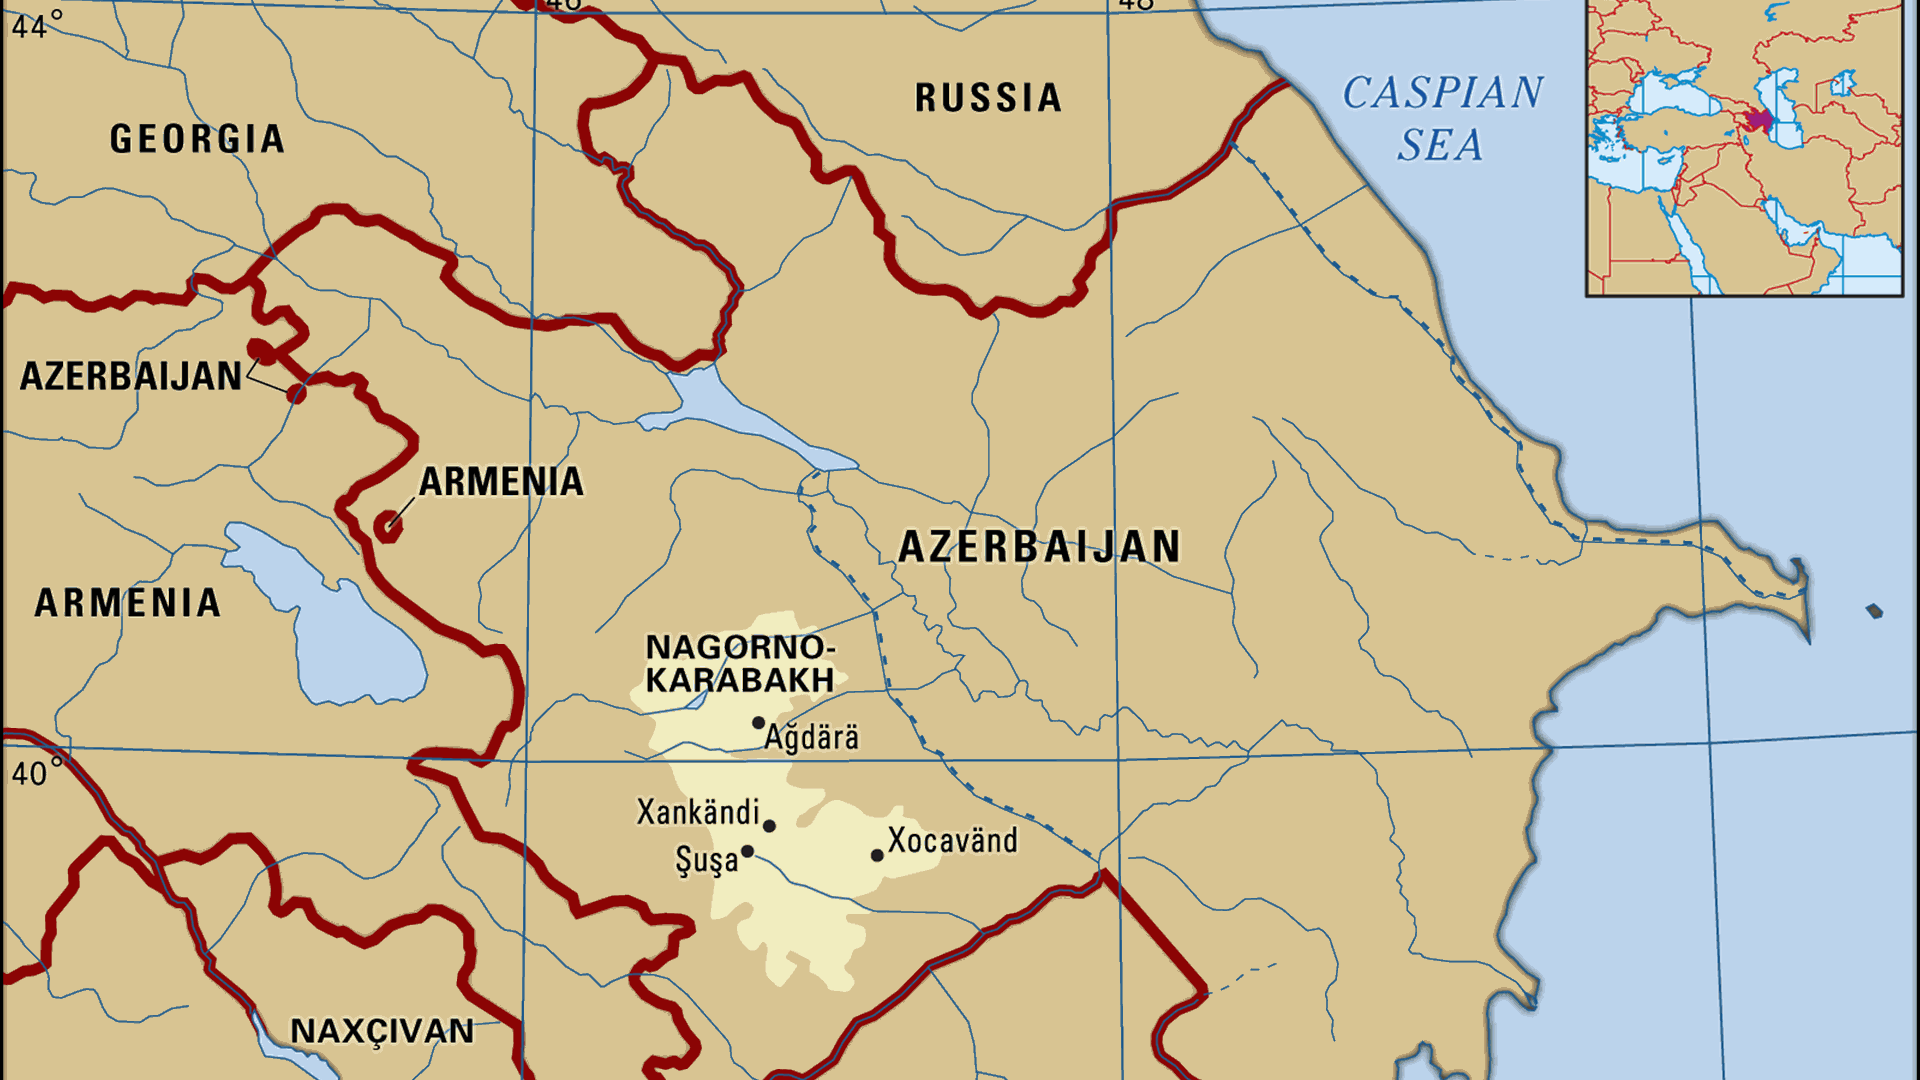 Decades of hatred between Armenia and Azerbaijan